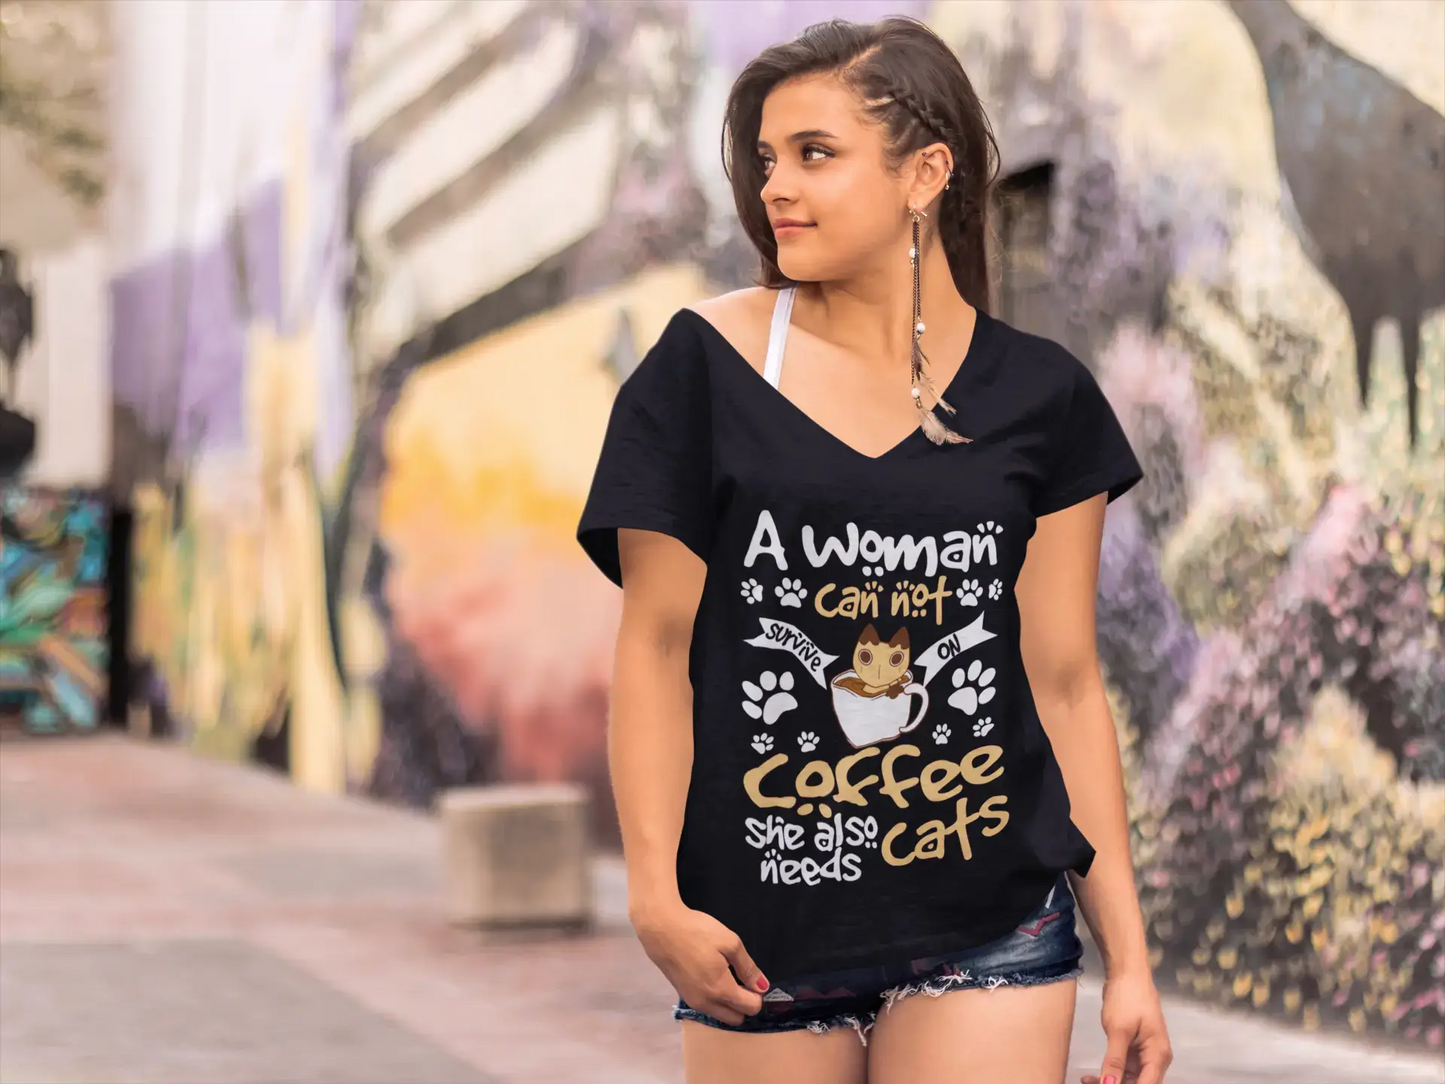 ULTRABASIC Damen-T-Shirt „A Woman Can Not Survive on Coffee Alone She Needs Cats“ – Lustiges Kätzchen-Shirt für Katzenliebhaber